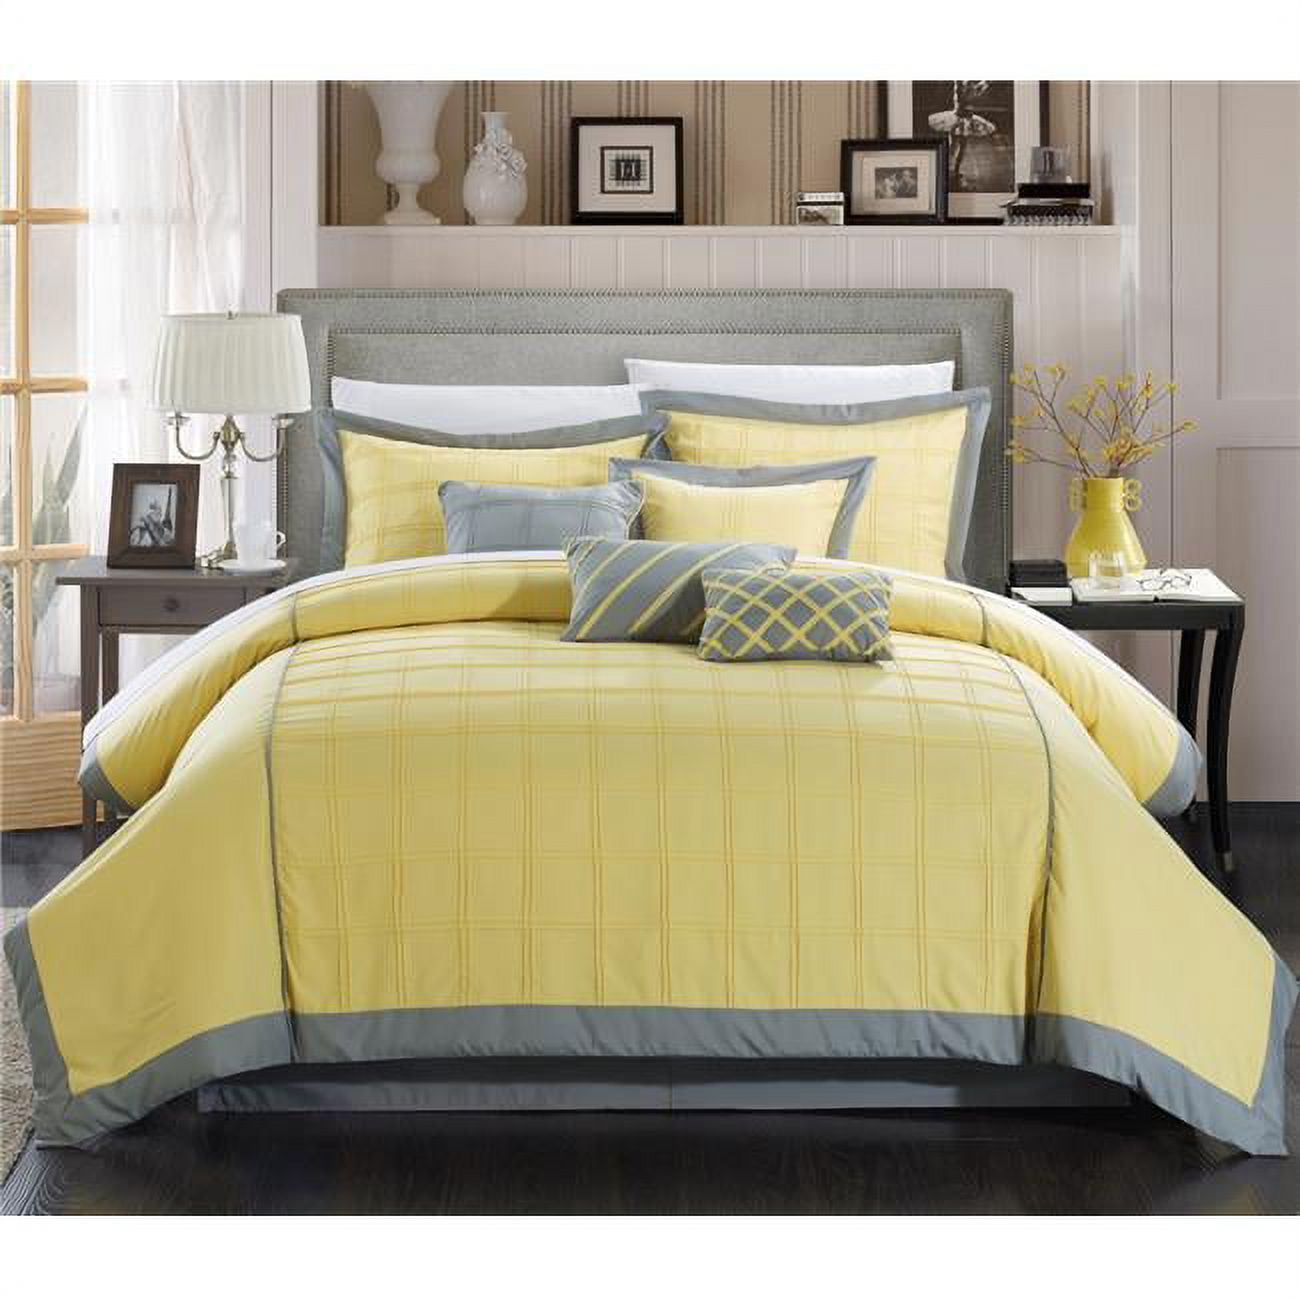 111cq111-bib-us 12 Piece Cottage Pintuck Color Block Queen Comforter Set, Yellow With Sheet Set